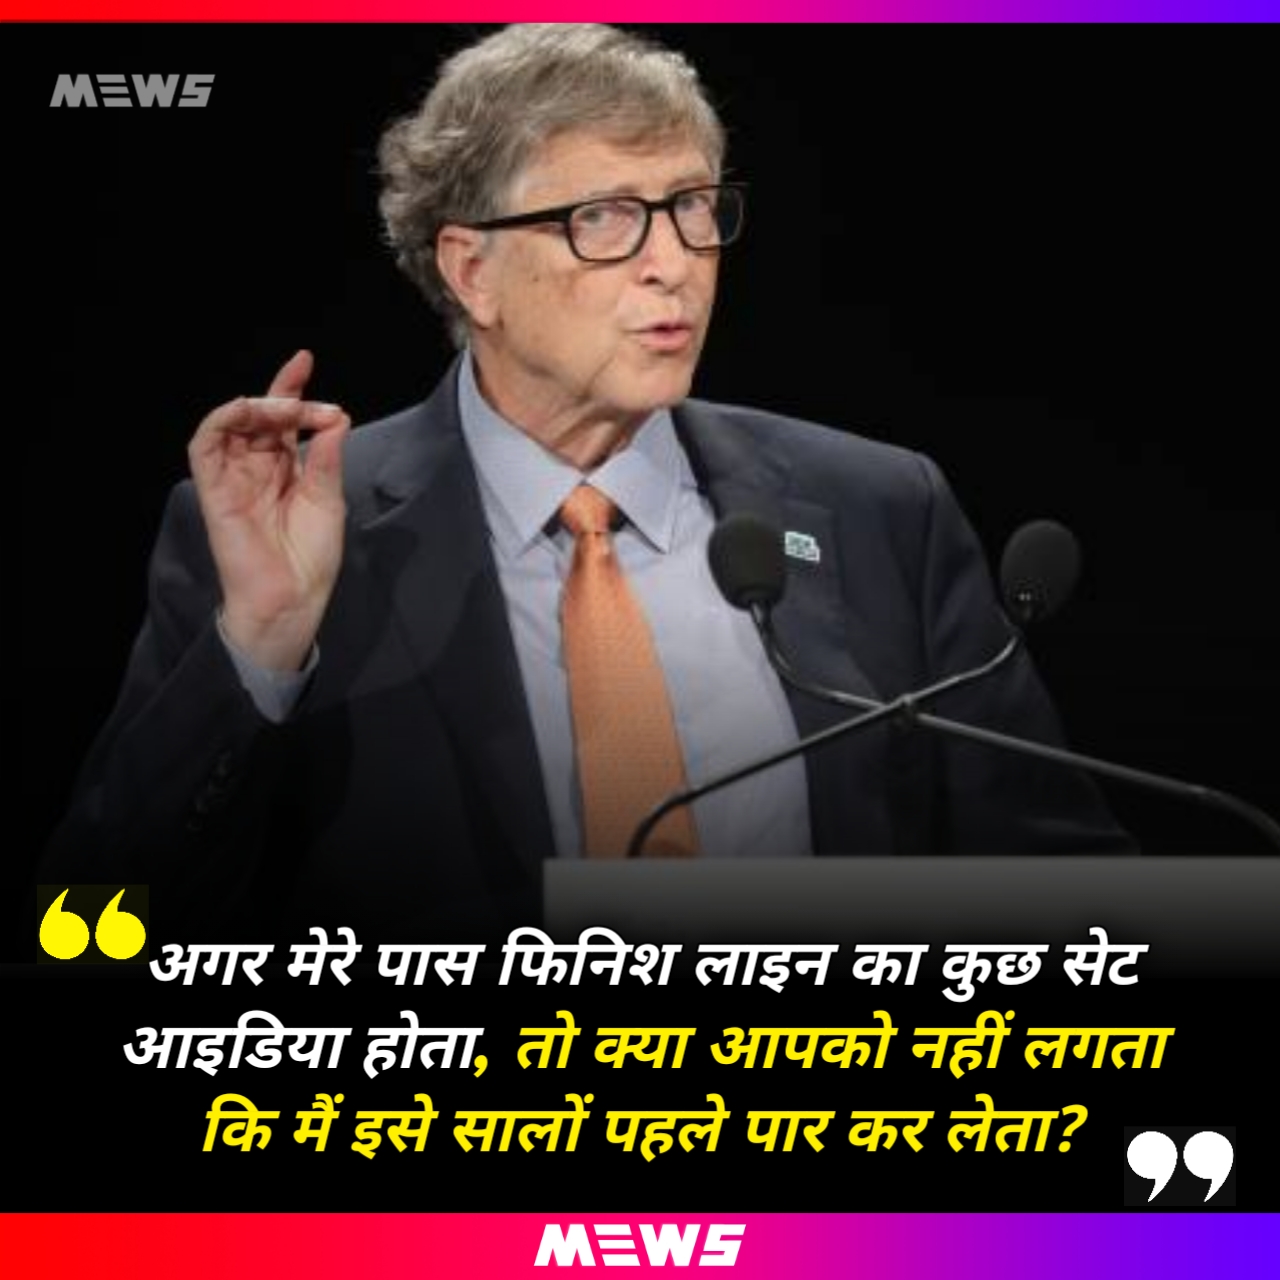 Bill Gates quotes in Hindi